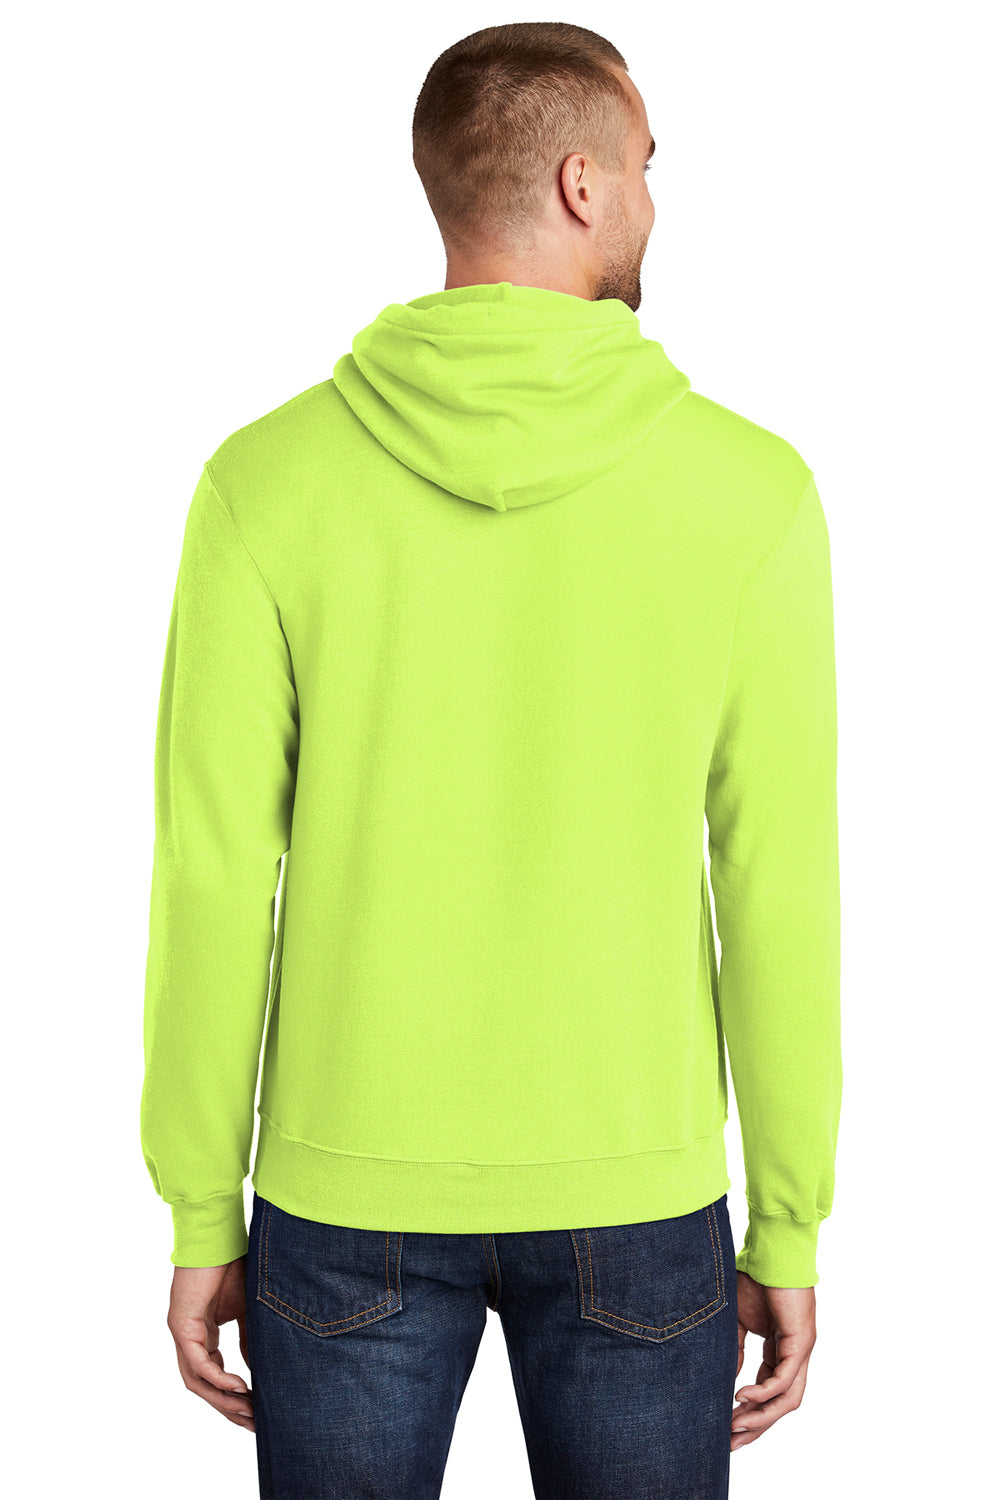 Port & Company PC78H Mens Core Fleece Hooded Sweatshirt Hoodie Neon Yellow Back